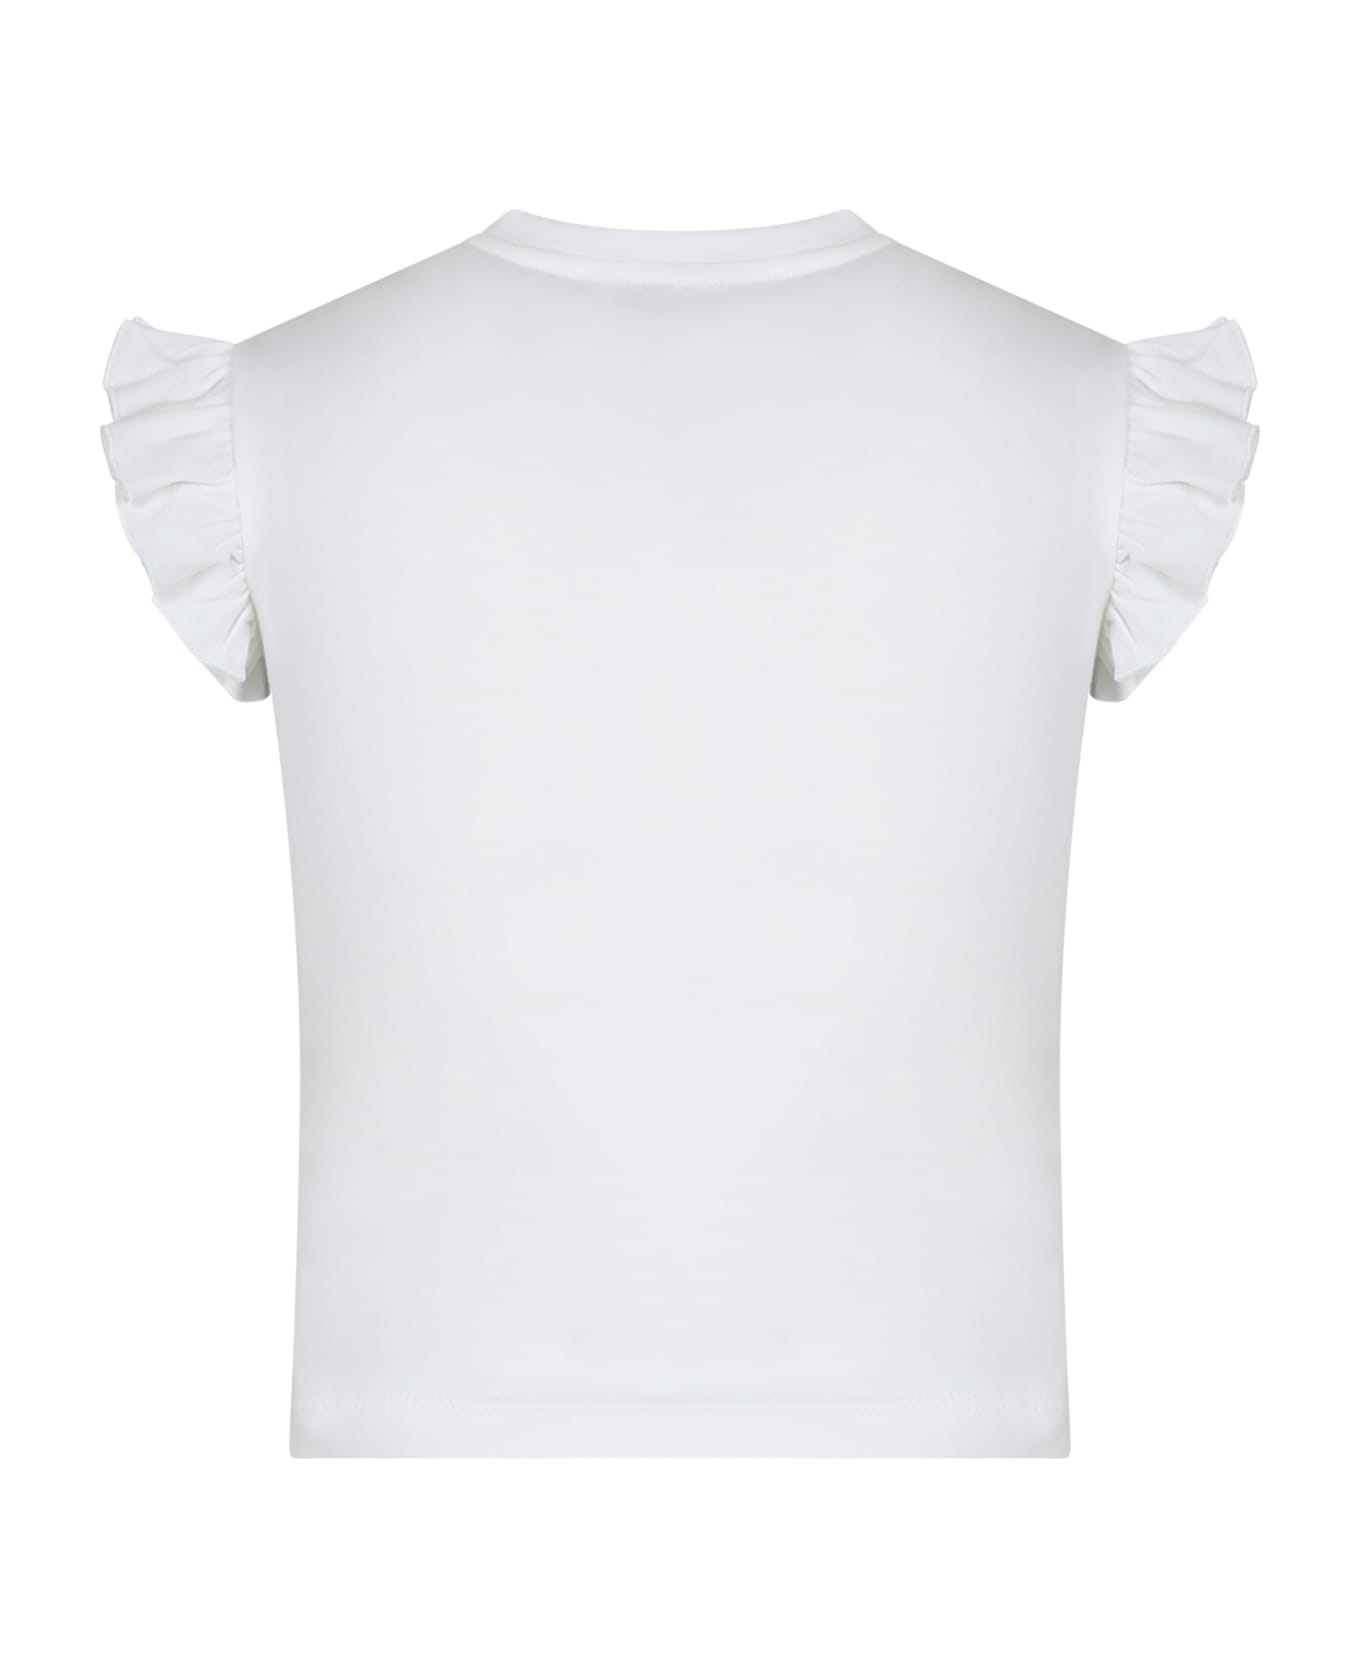 Simonetta White T-shirt For Baby Girl With Roses - White Tシャツ＆ポロシャツ